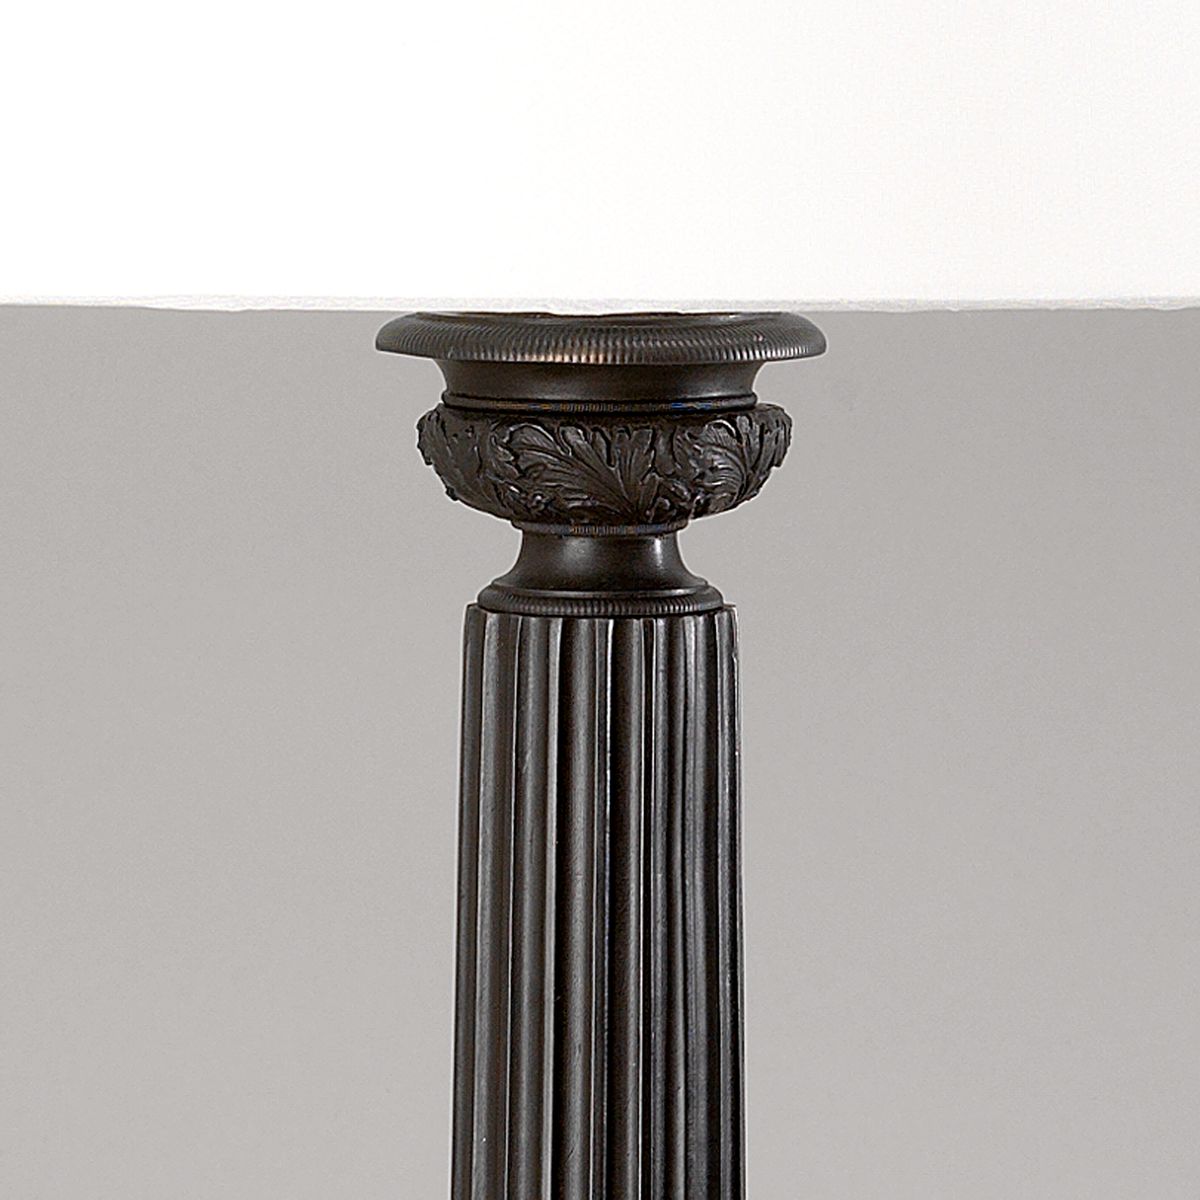 Bronze column lamp with laminated cream shade detail